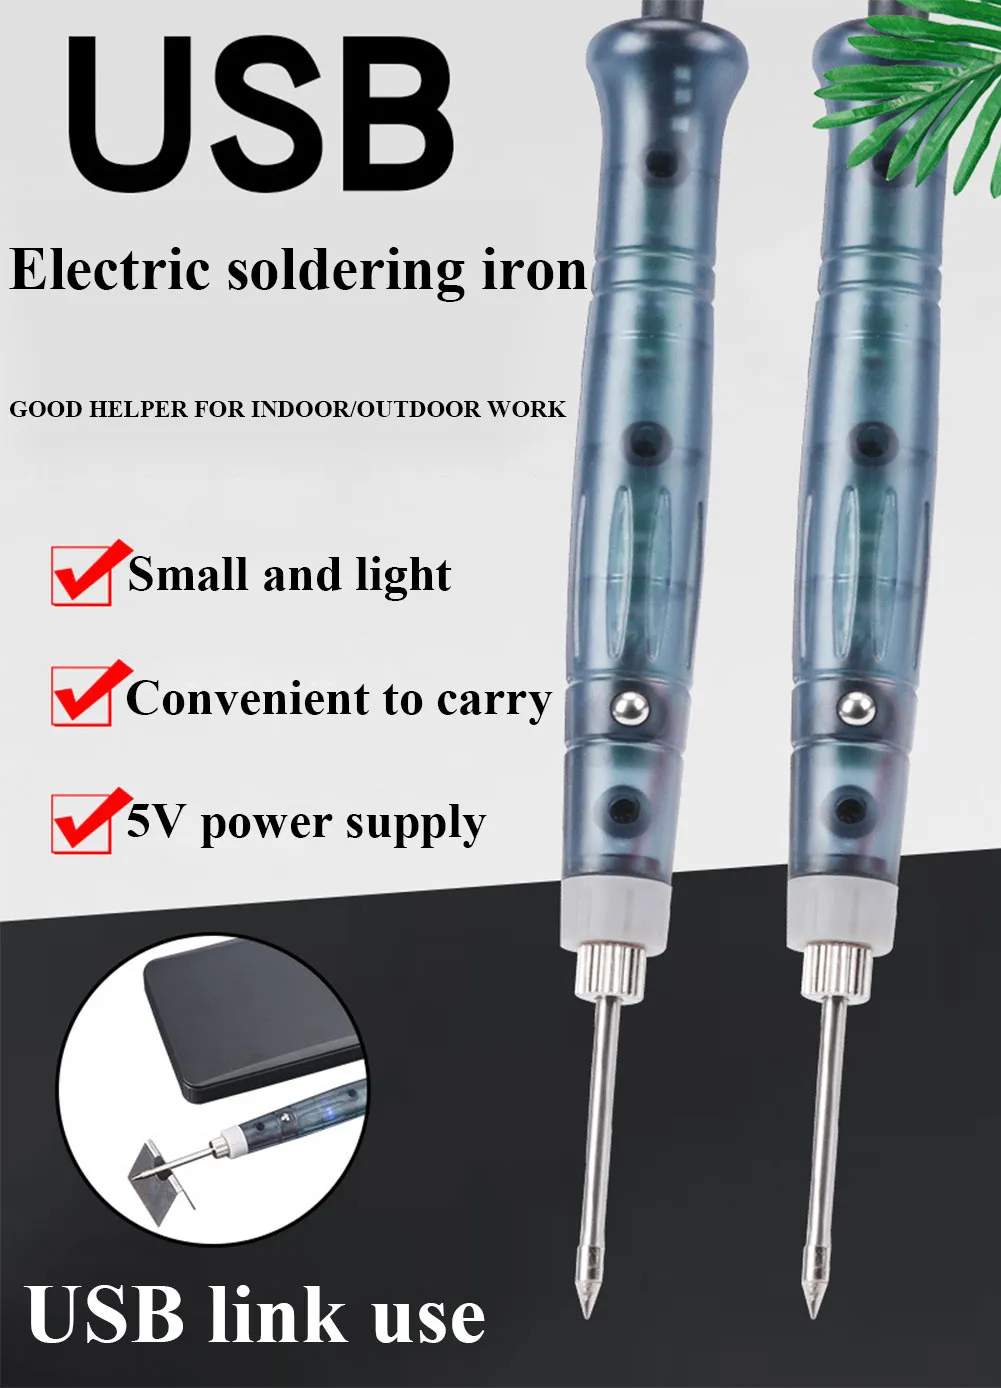 5V USB Soldering Iron Professional Electric Heating Tools Rework With Indicator Light Handle Welding Gun BGA Repair